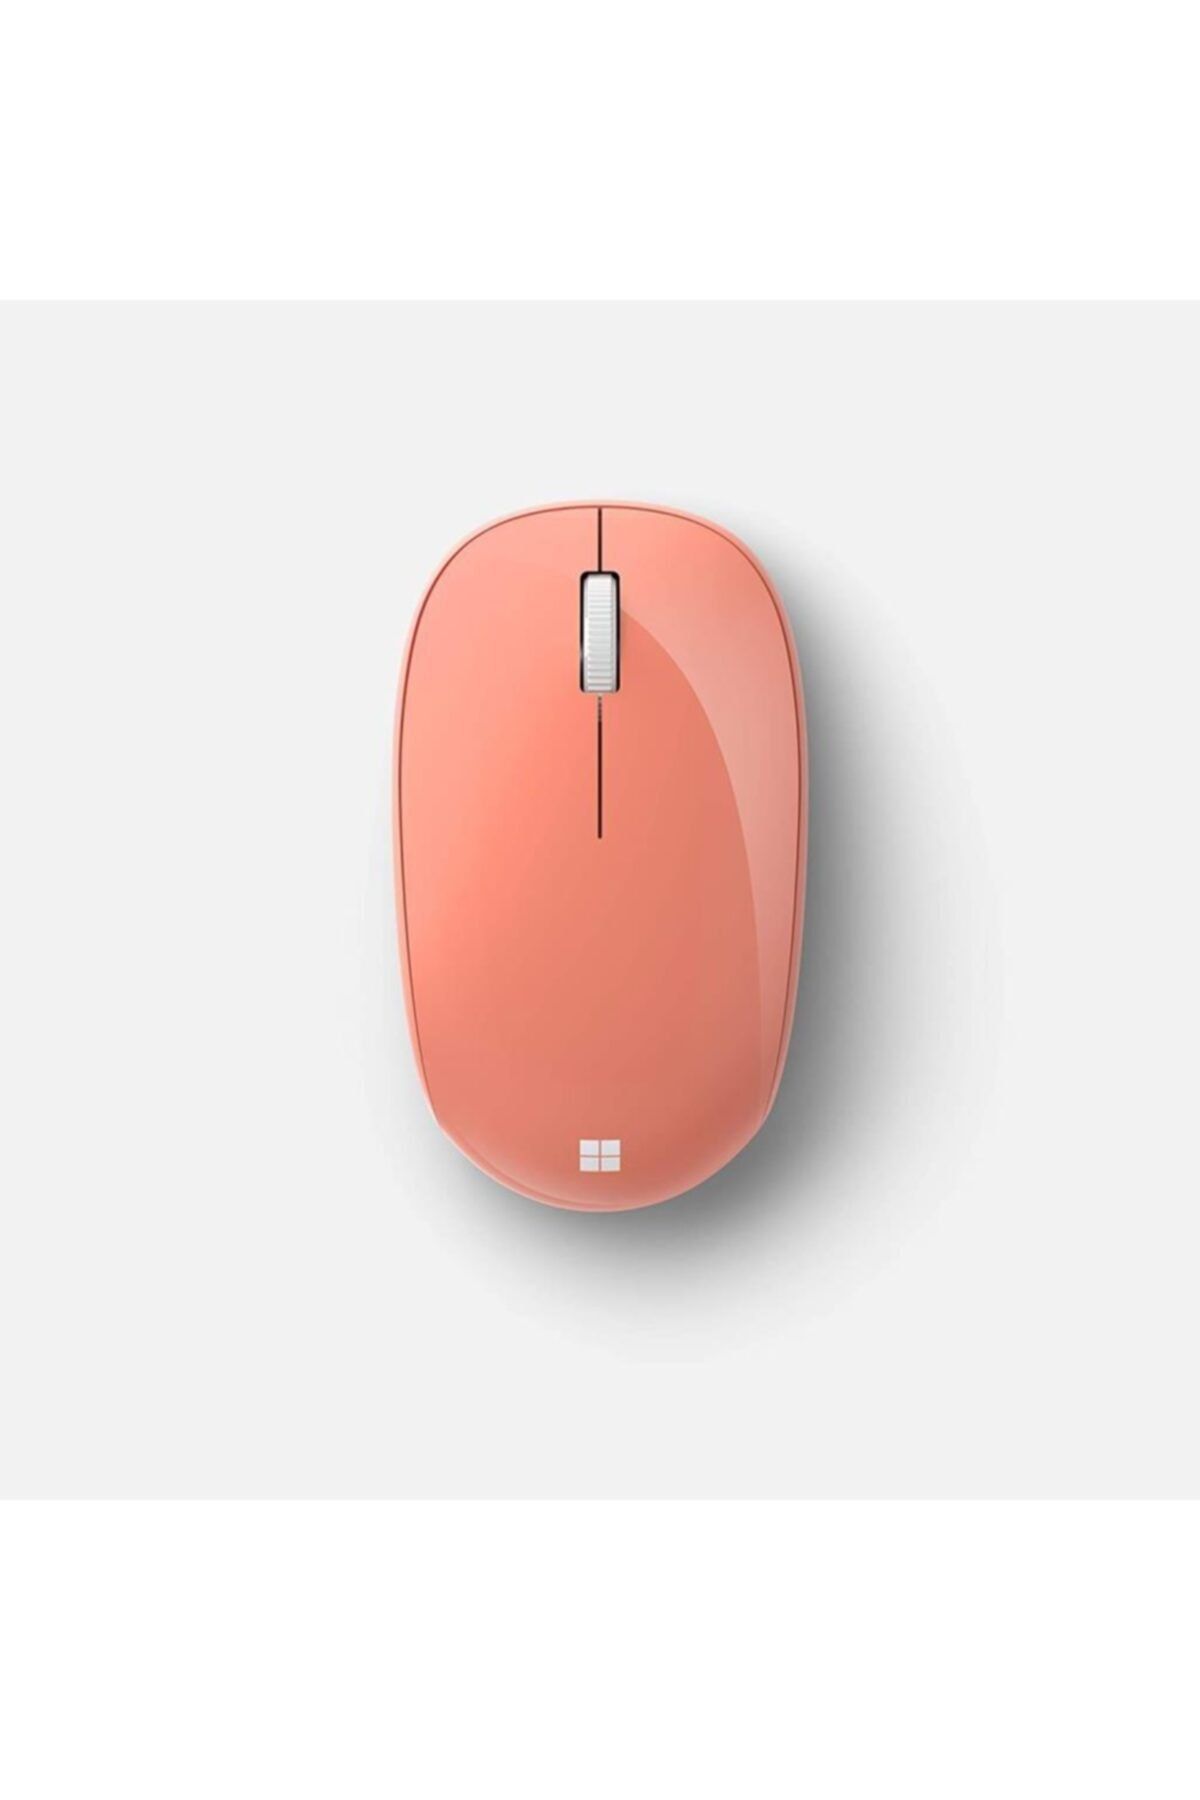 Microsoft Rjn-00043 Bluetooth Mouse,peach